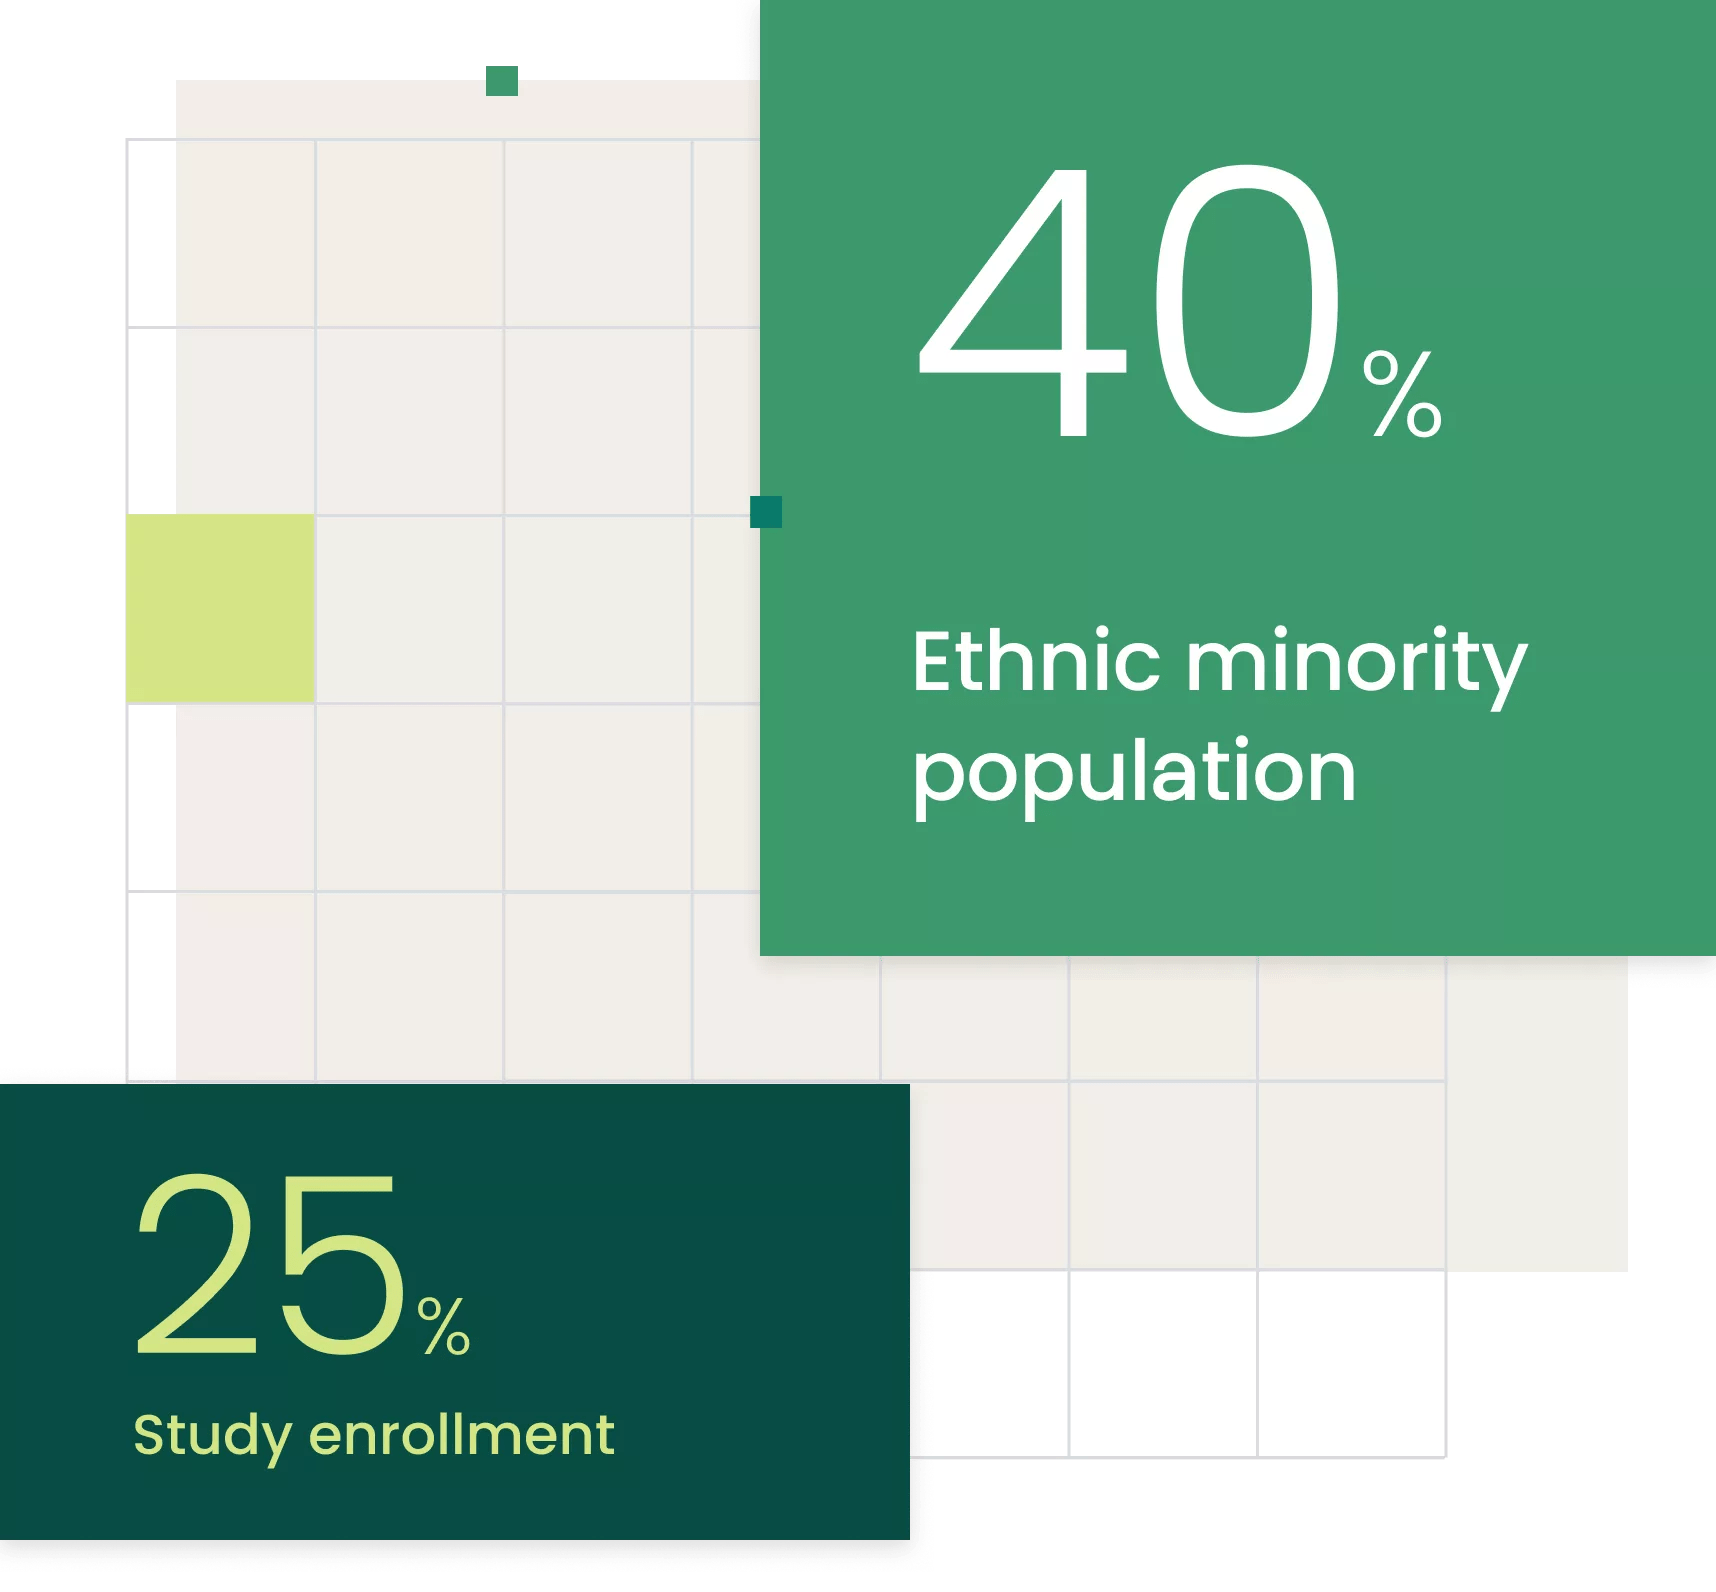 Ethnic minority population: 40%. Clinical study enrollment: 25%.